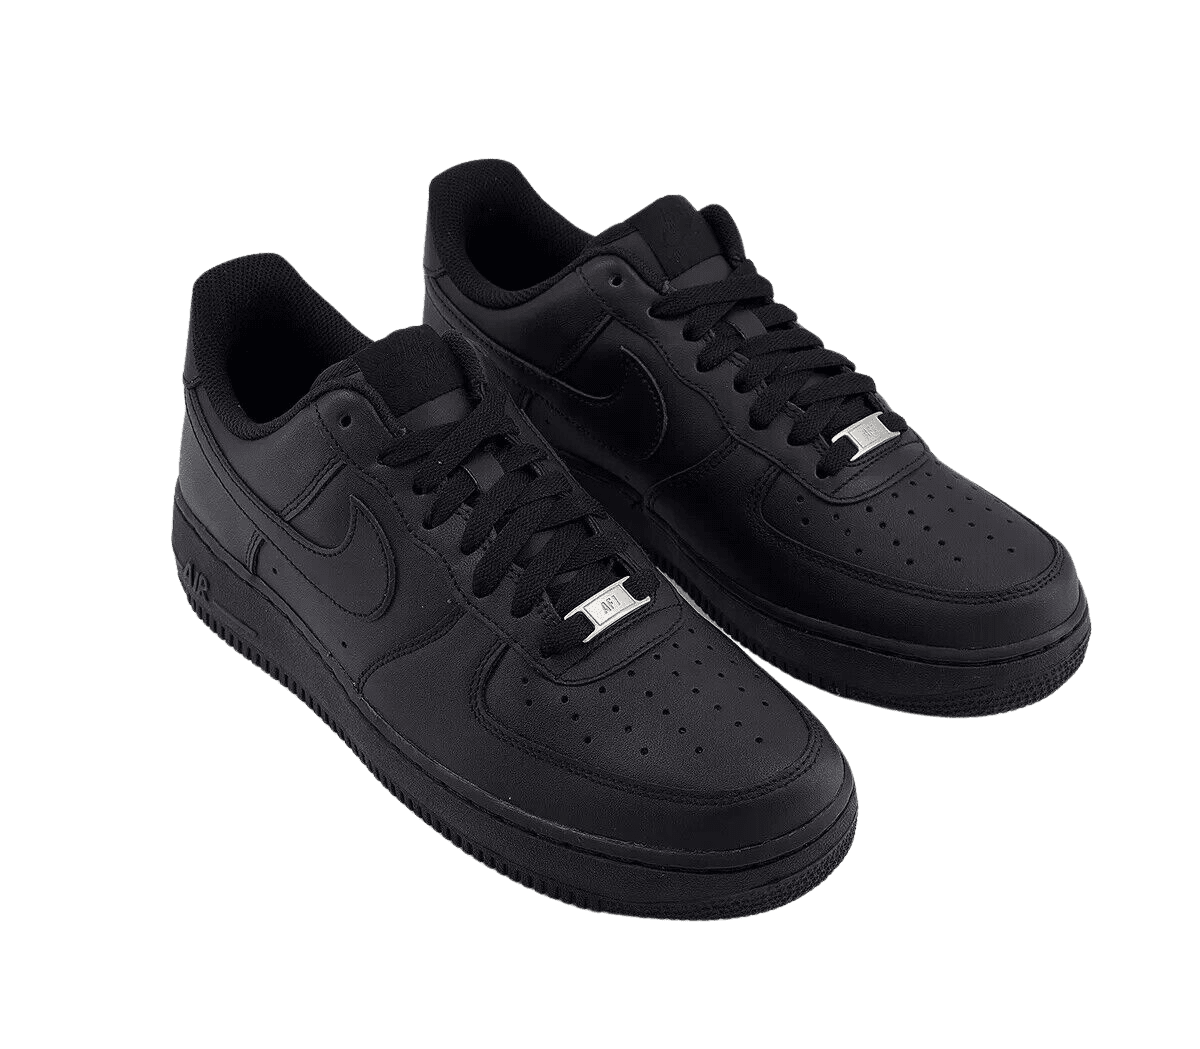 black air force 1 shoes